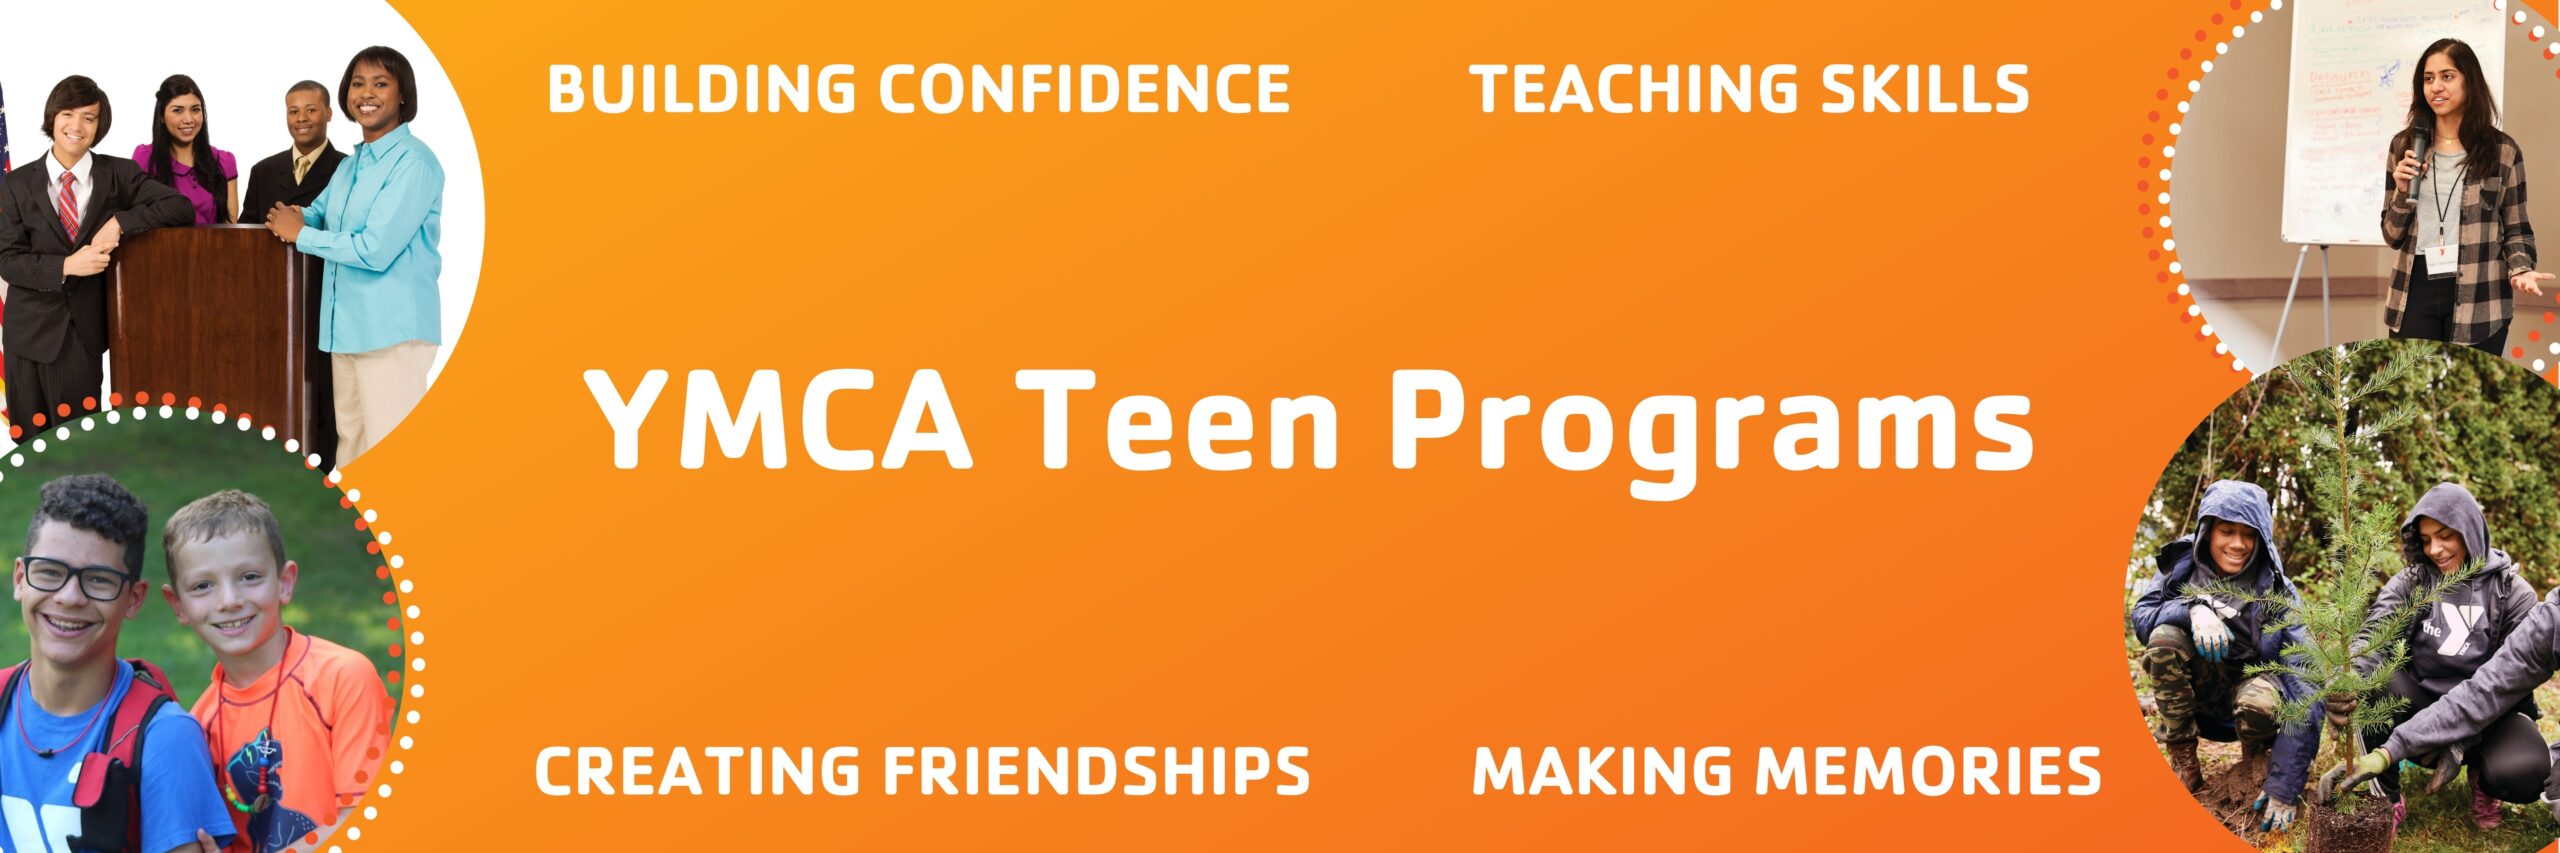 Teen Programs